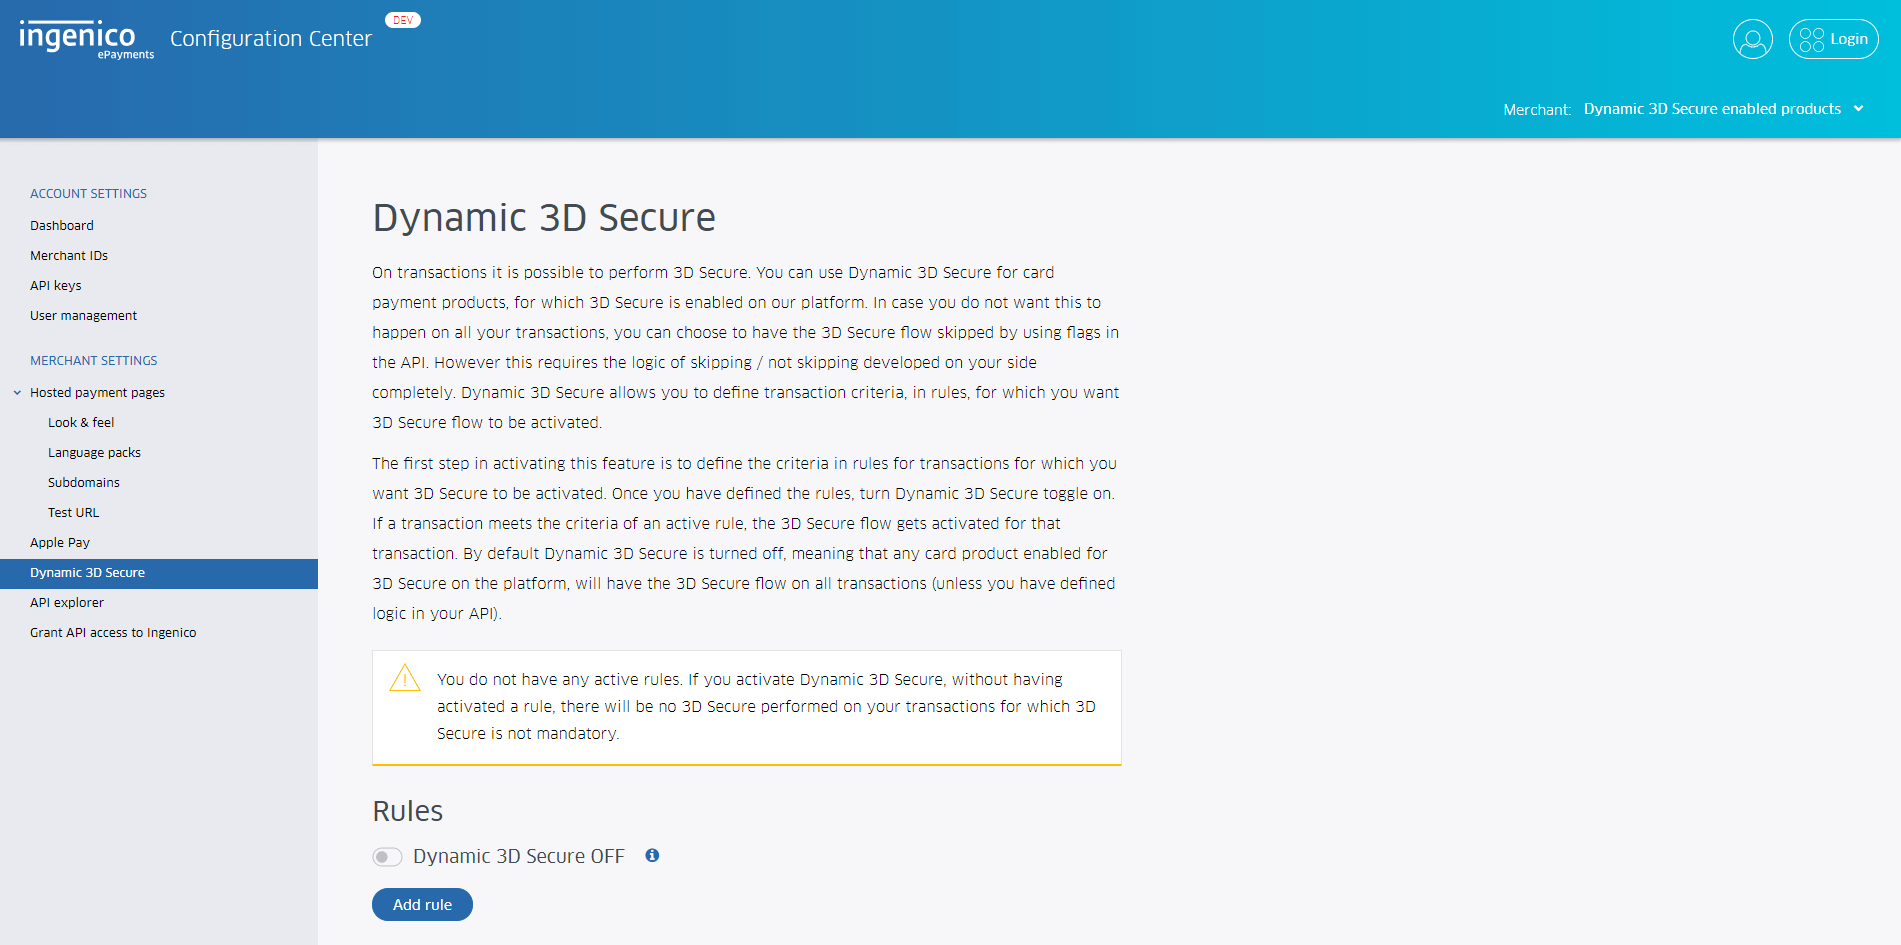 dynamic 3d secure - step 2 - open menu item